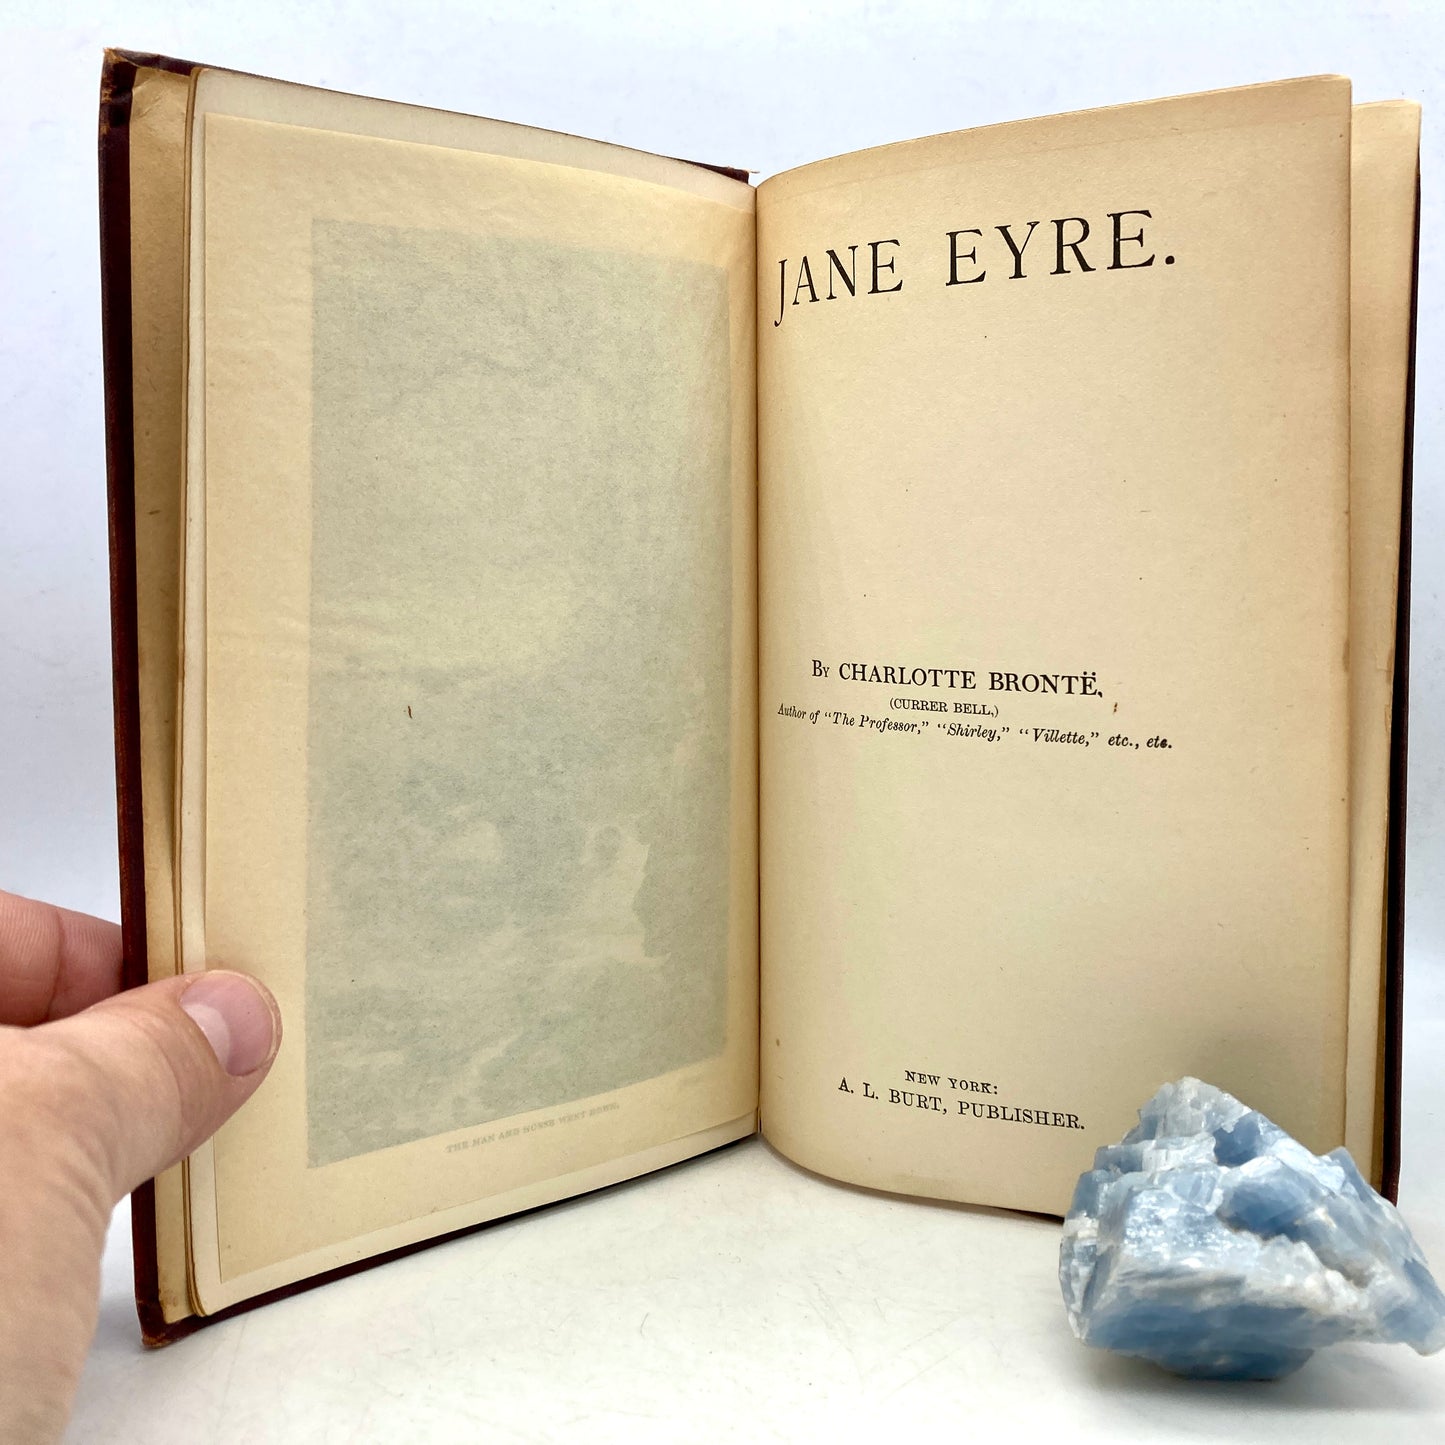 BRONTE, Charlotte "Jane Eyre" [A.L. Burt, n.d./c1900]